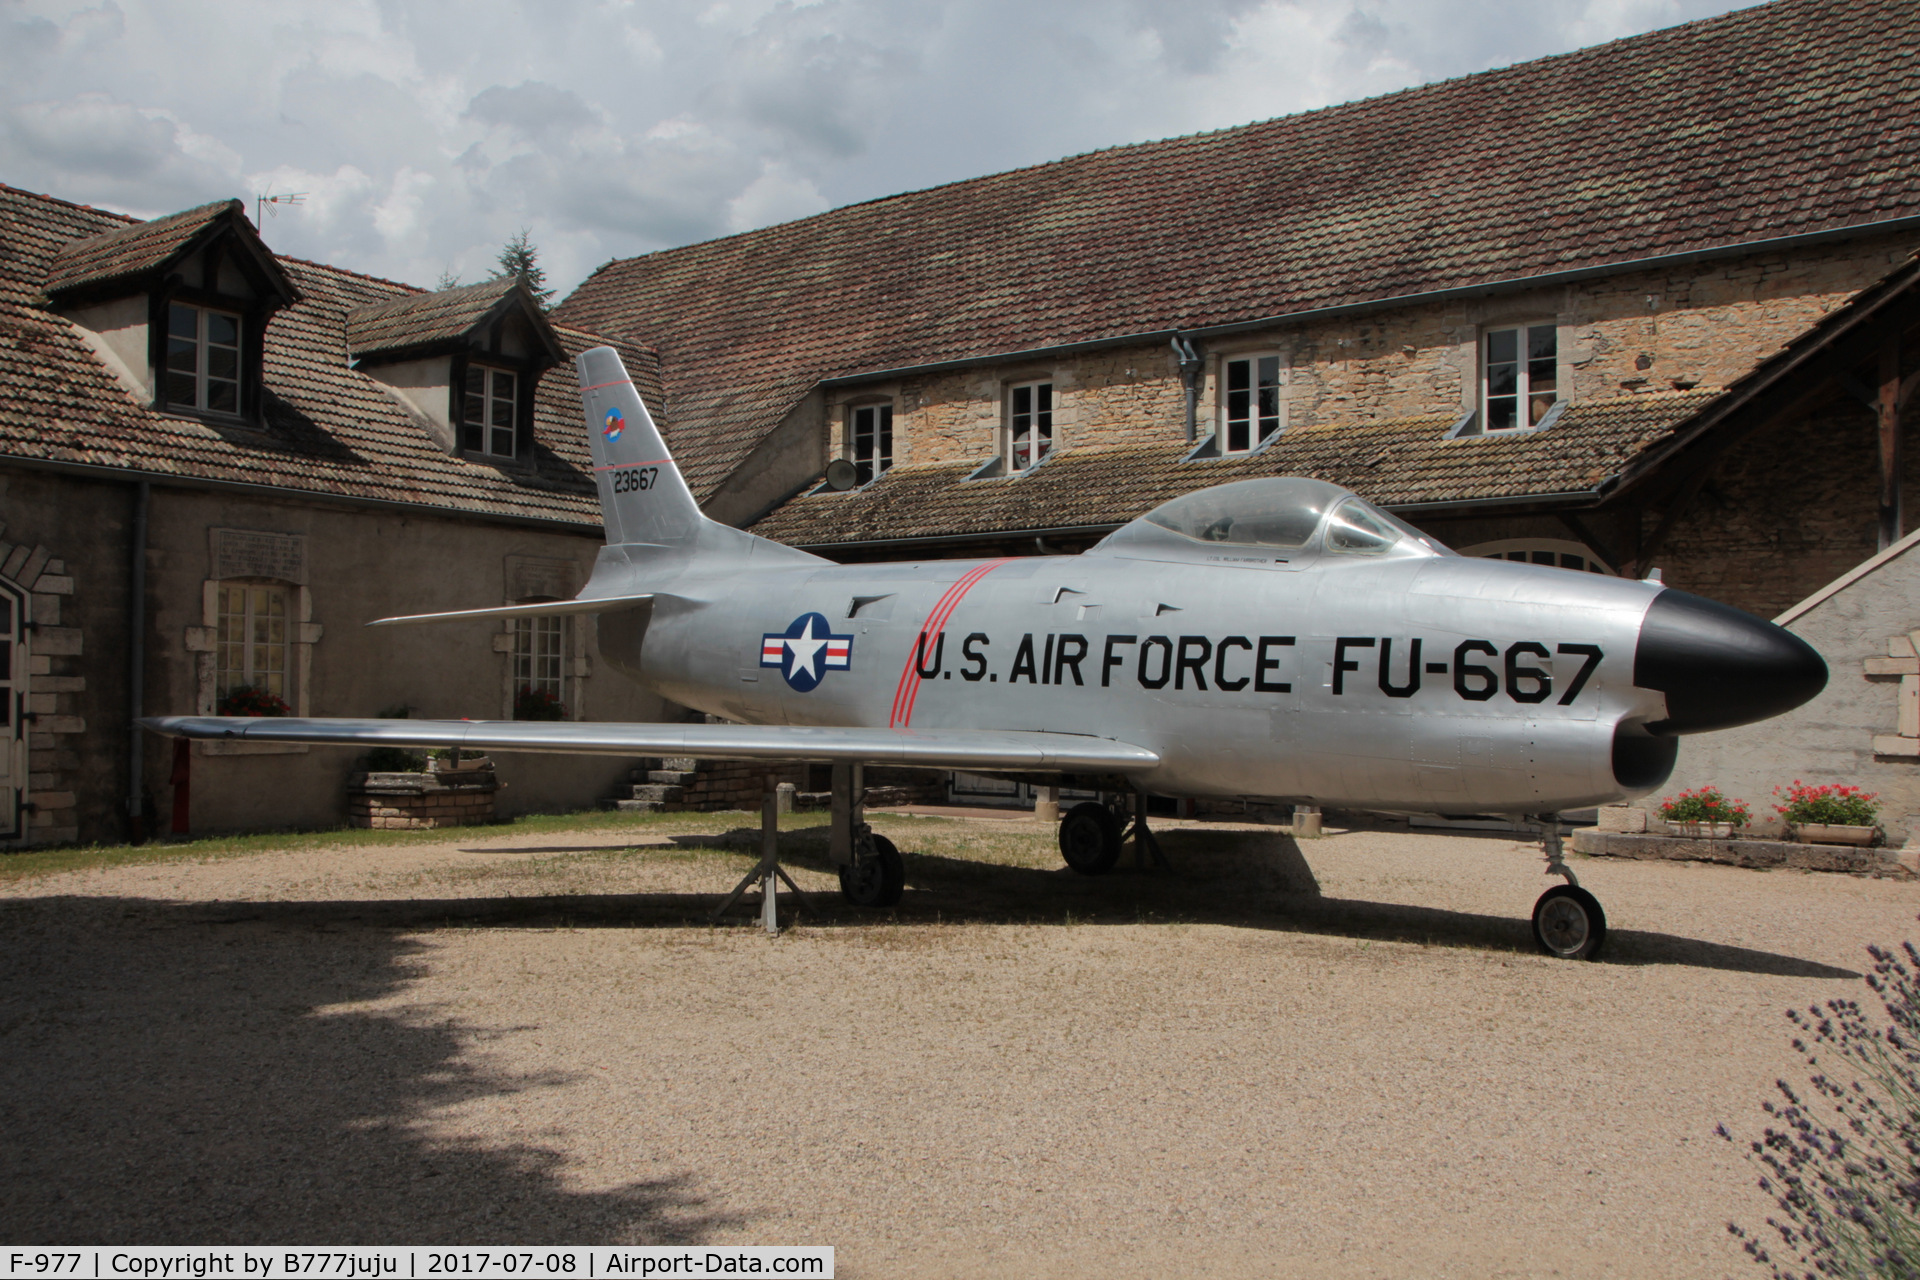 F-977, North American F-86D-30 Sabre C/N 173-121, peint 52-3667 FU-667 USAF at Savigny-les-Beaune